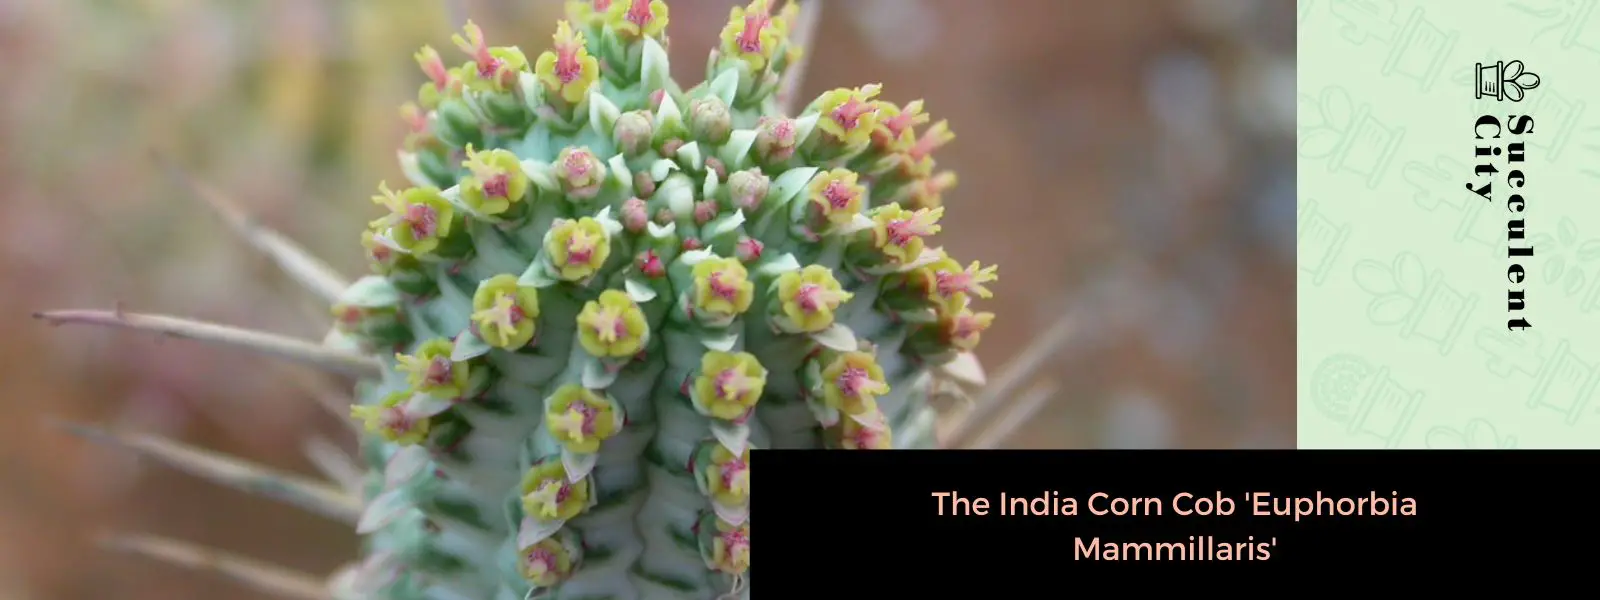 Euphorbia Mammillaris (mazorca de maíz india)